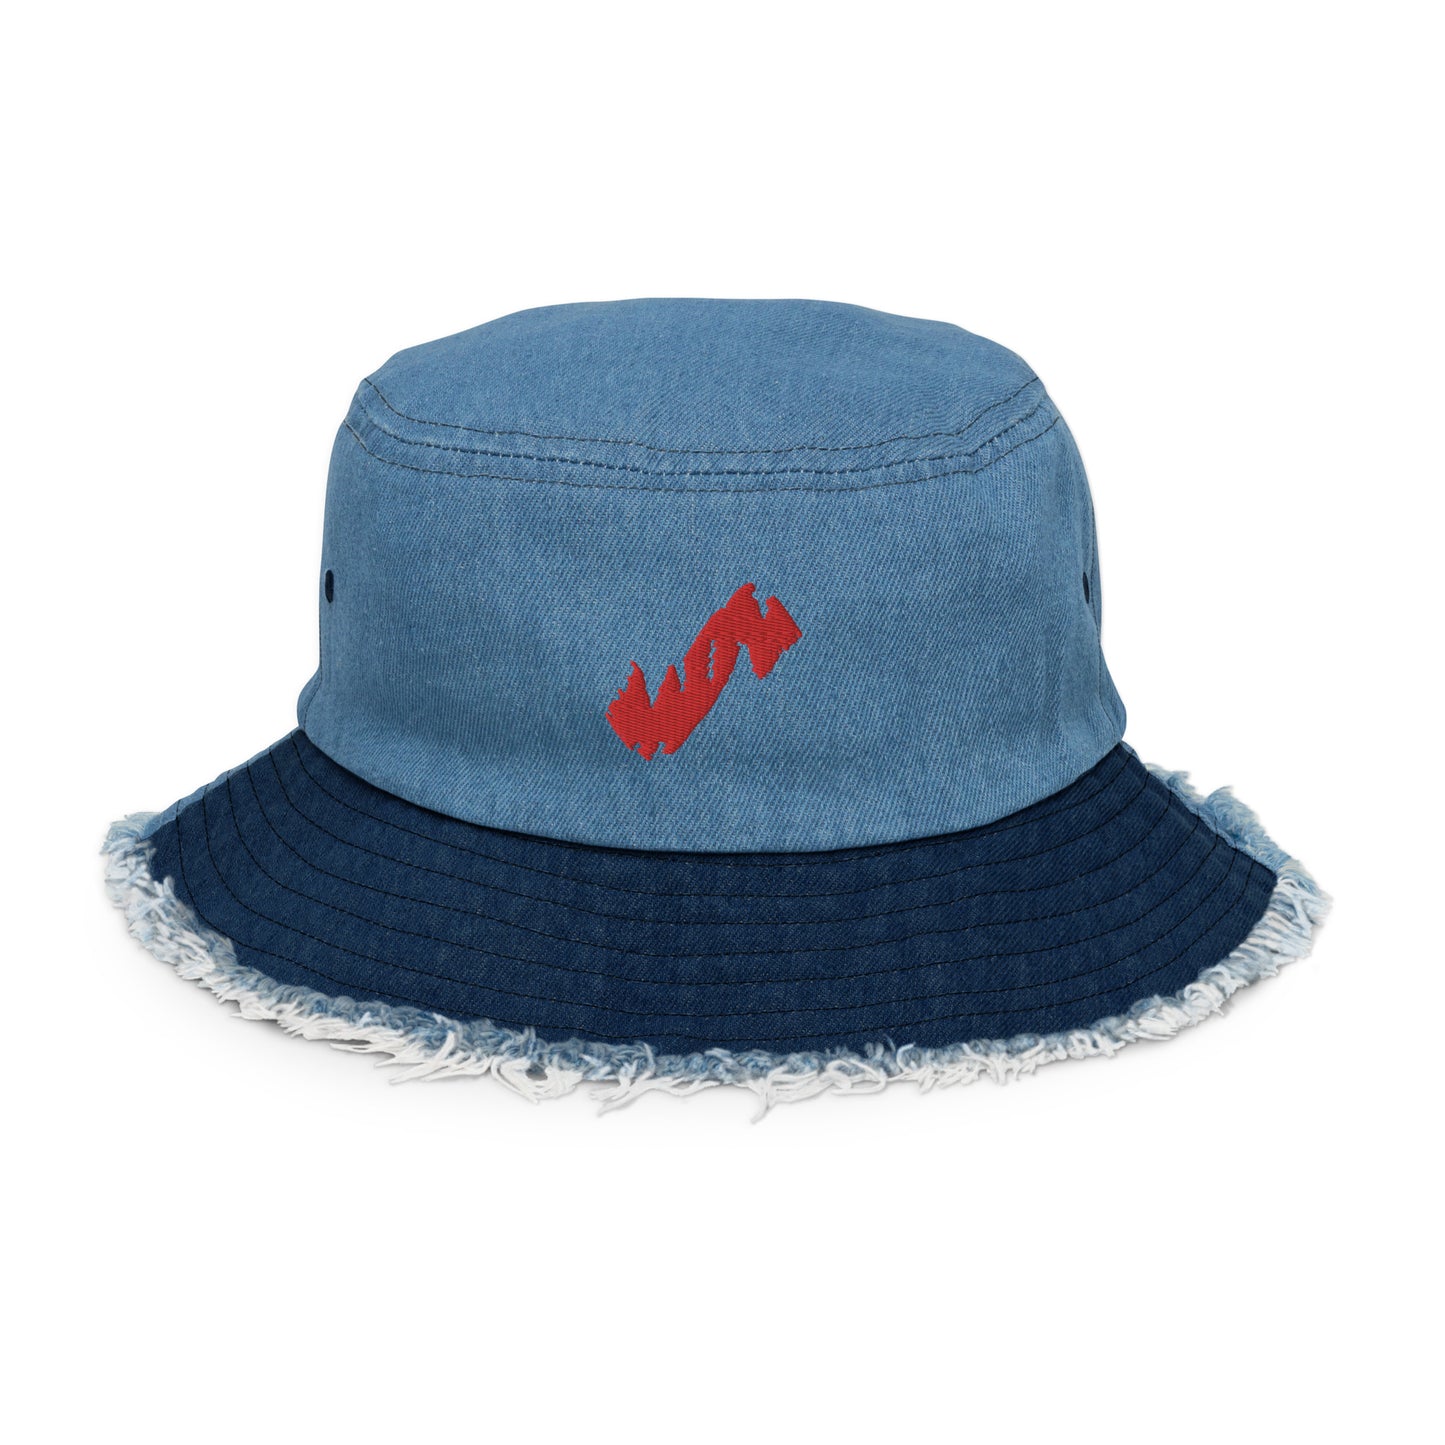 Red MDV Wave Distressed denim bucket hat